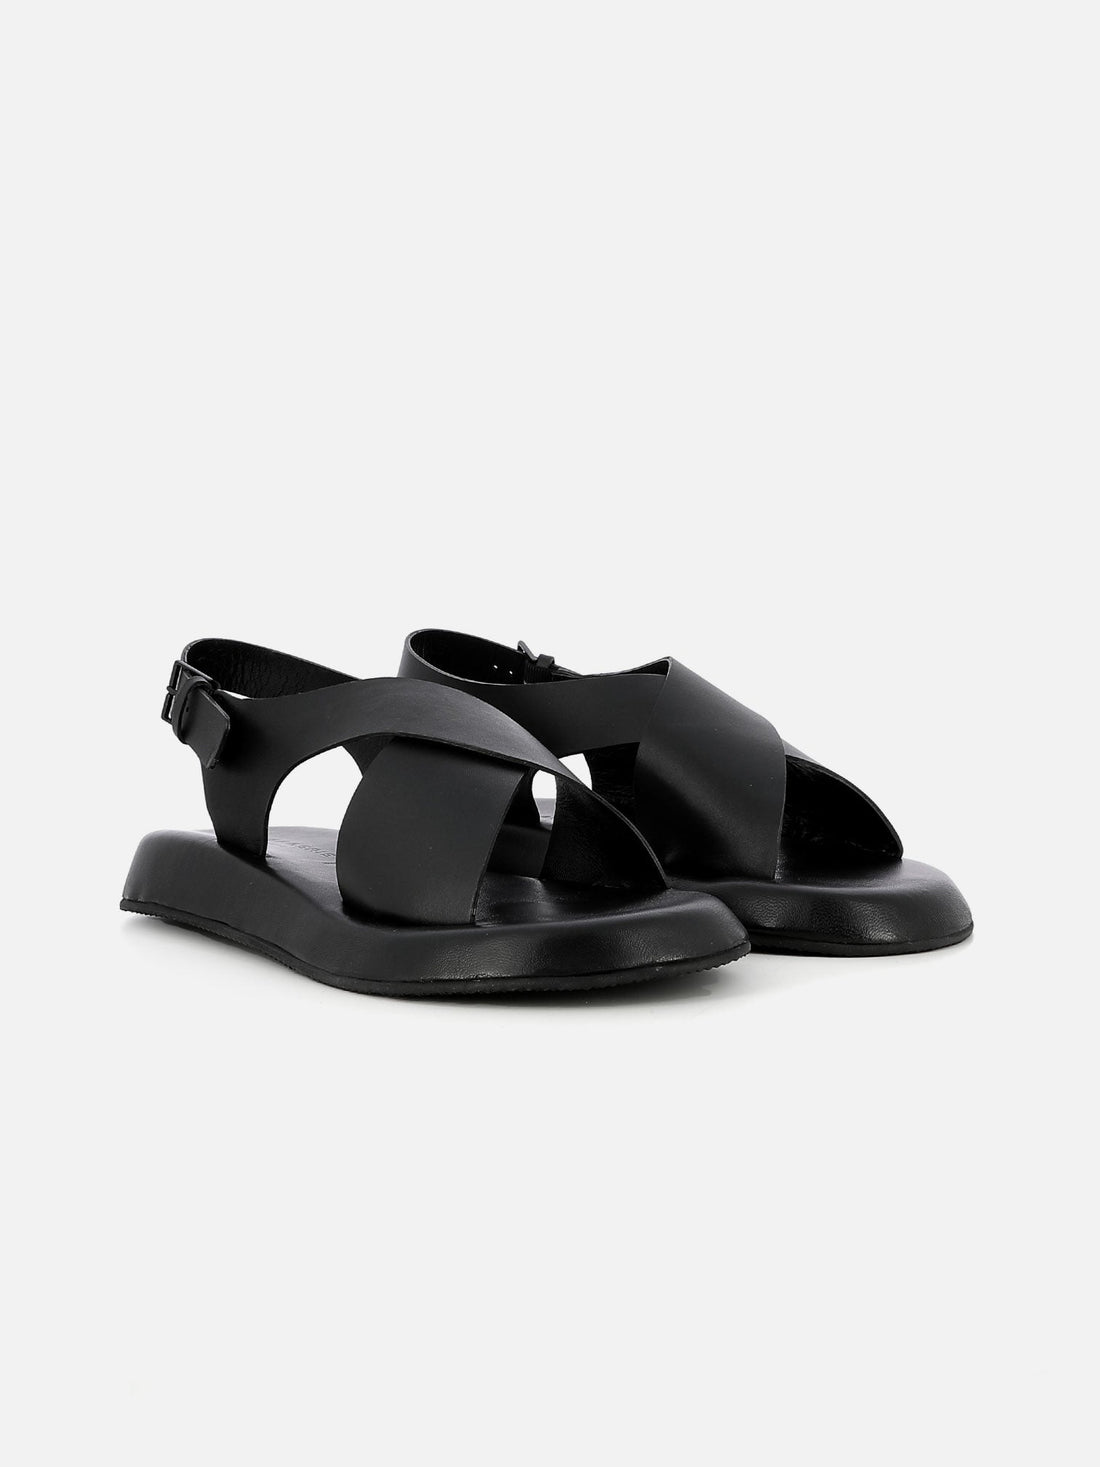 SANDALS - LAIKA sandals, calfskin black - 3606063630481 - Clergerie Paris - Europe